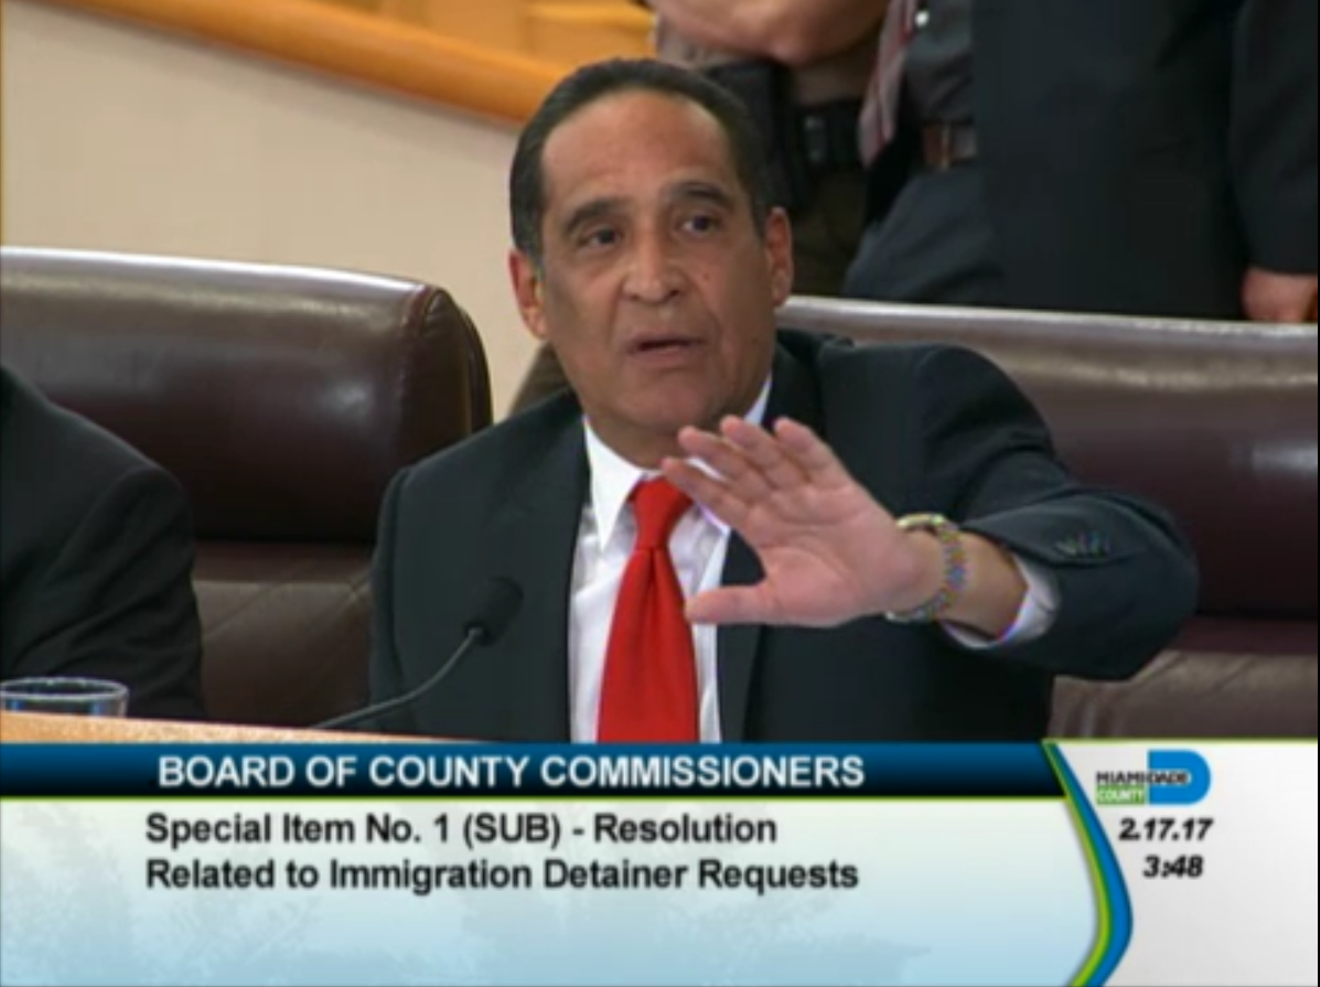 Miami-Dade County Commissioner Joe Martinez